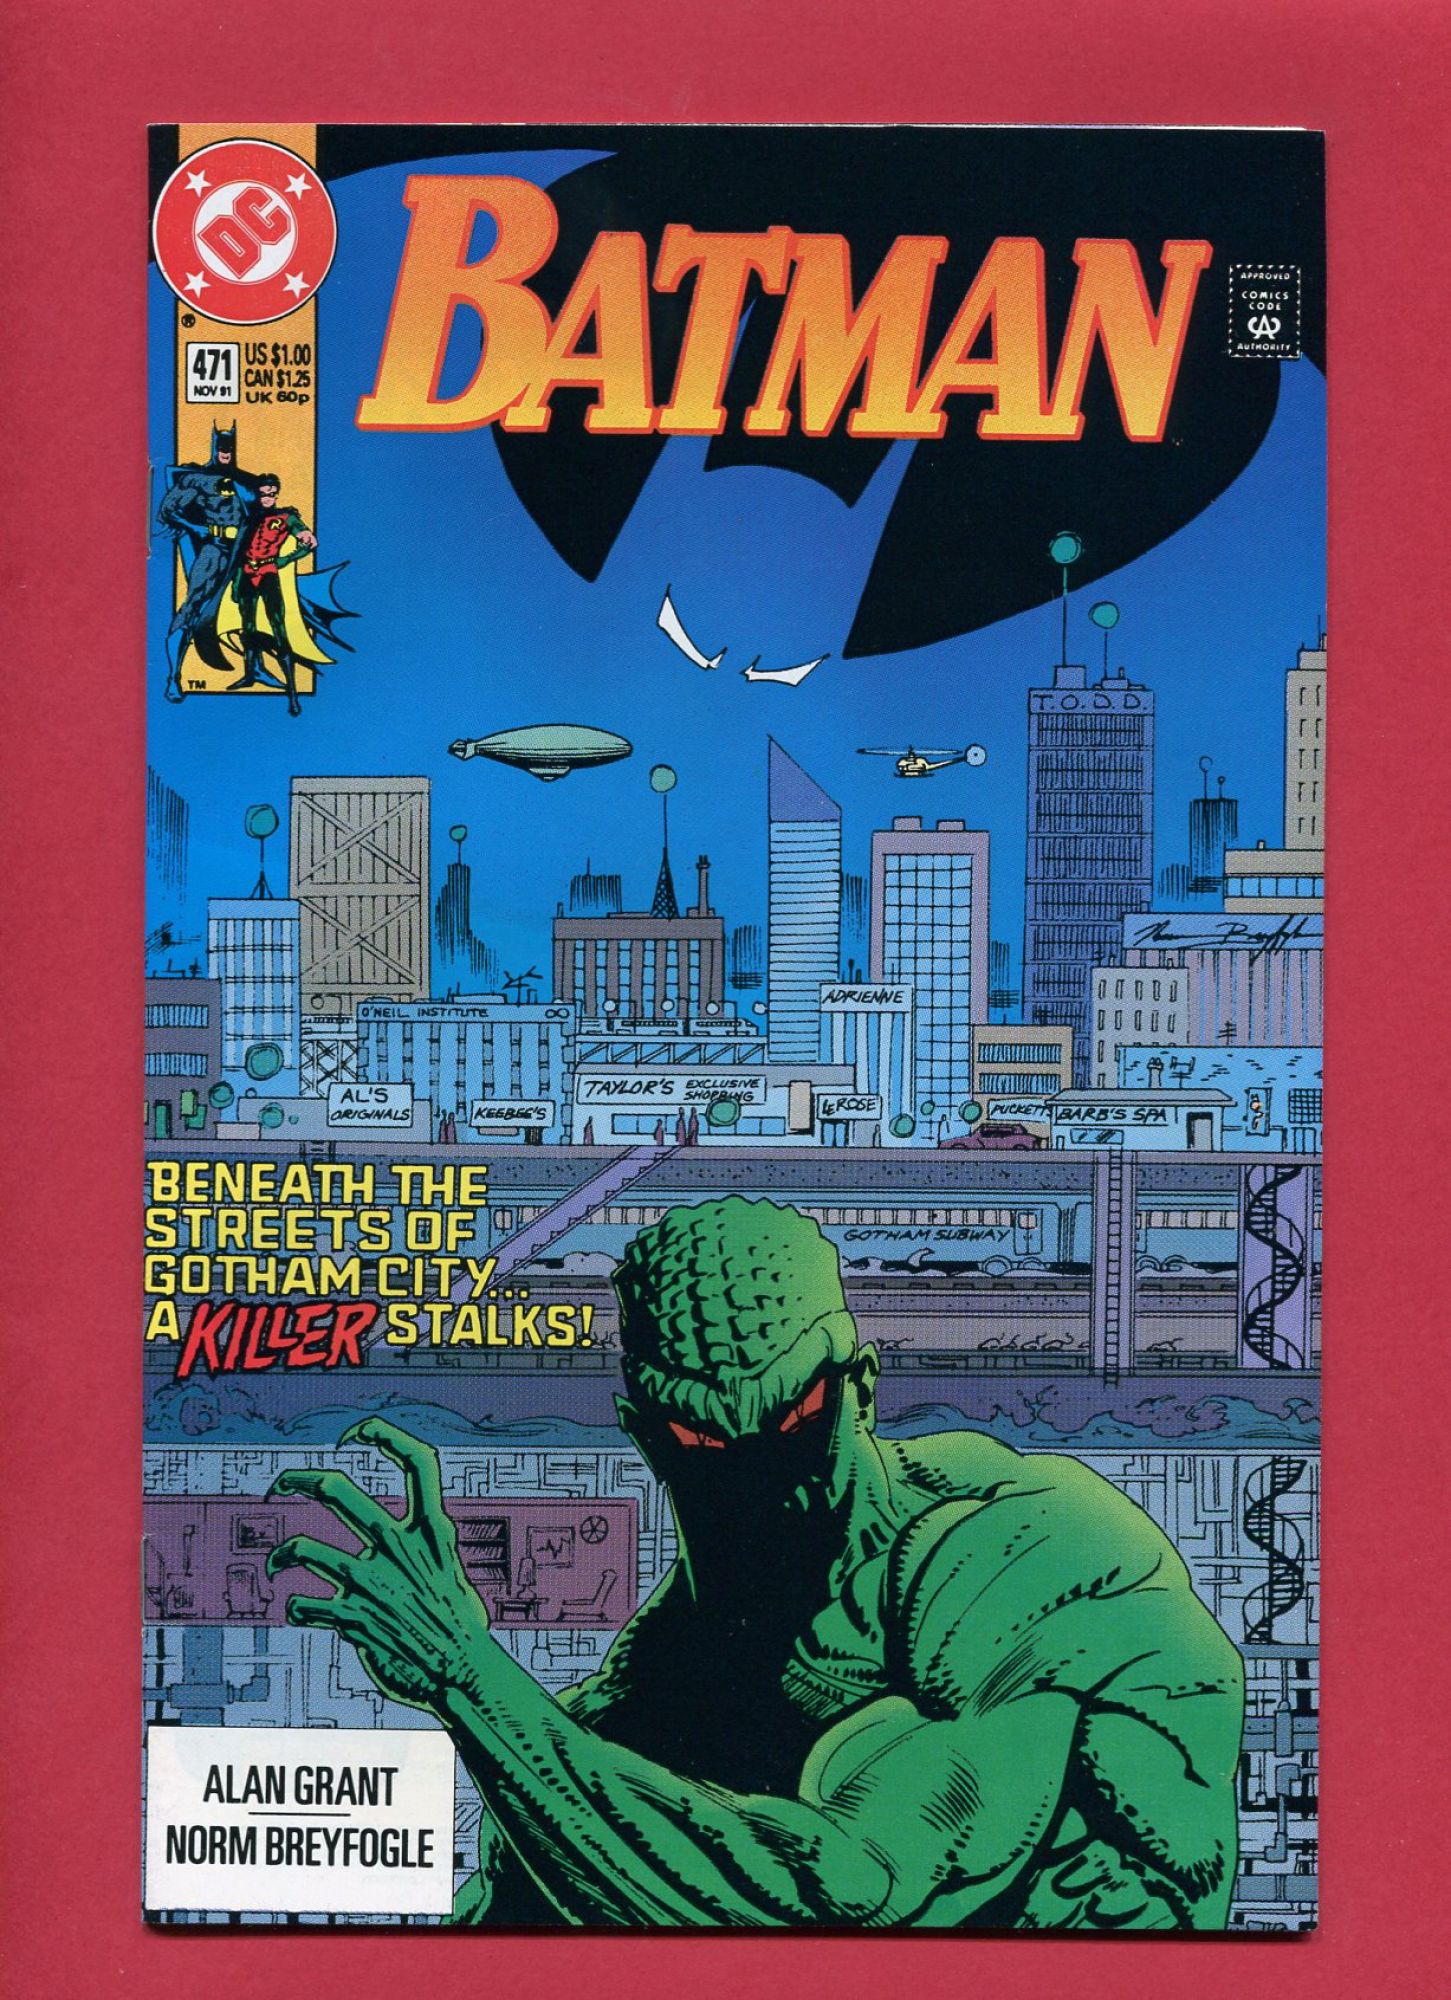 Batman (Volume 1 1940) #471, Nov 1991, Marvel :: Iconic Comics Online